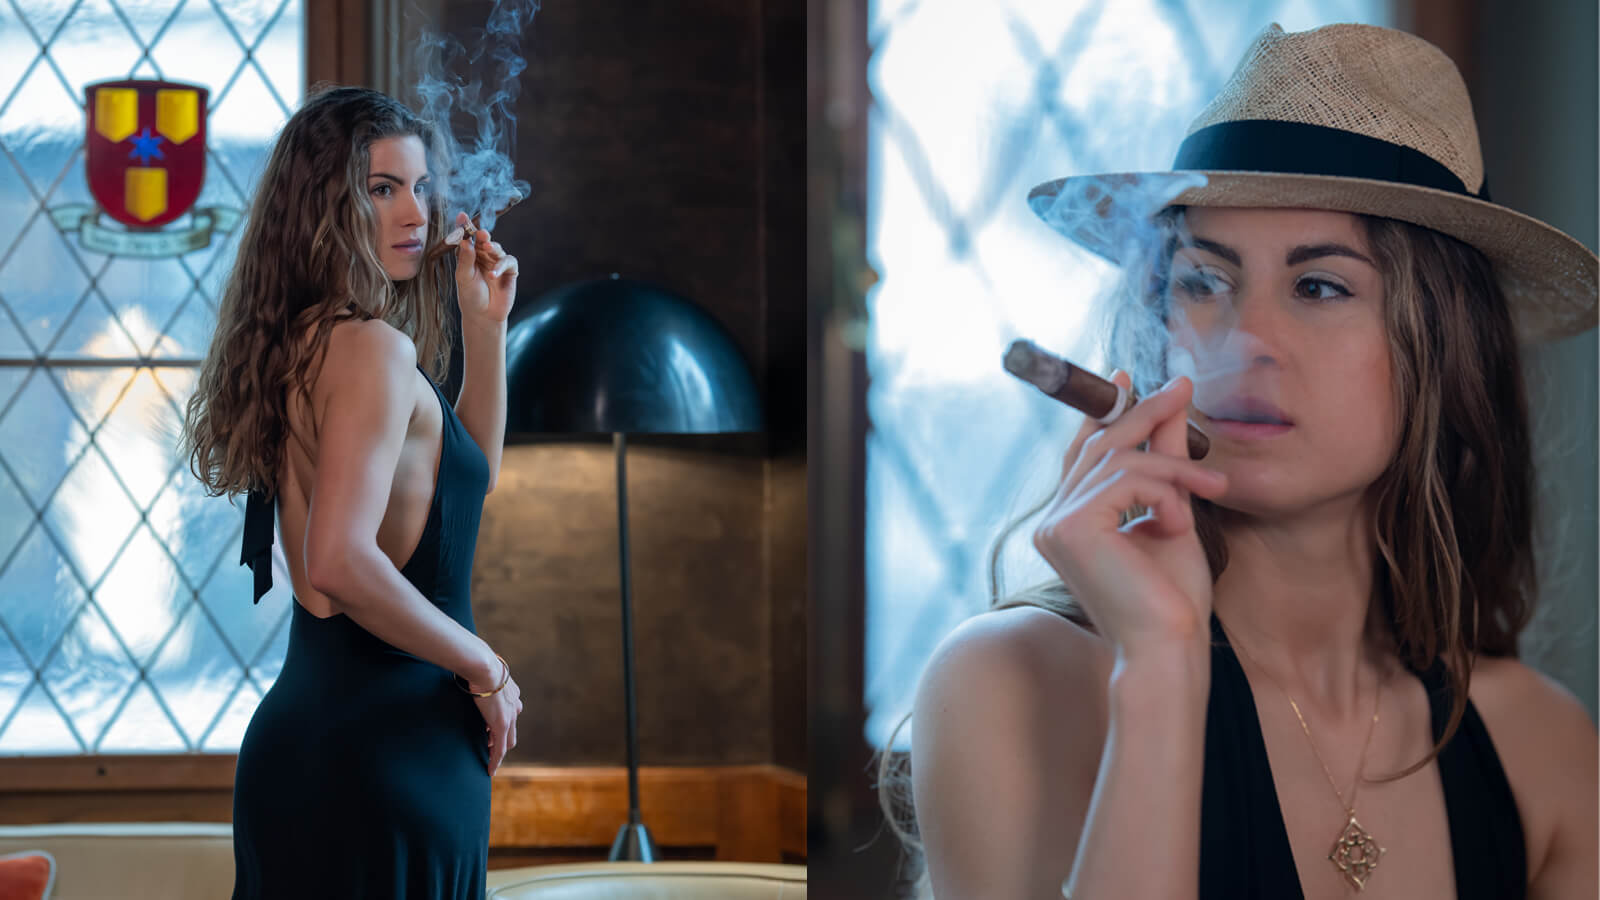 Reasons why do women athletes smoke cigars - Style Vanity.